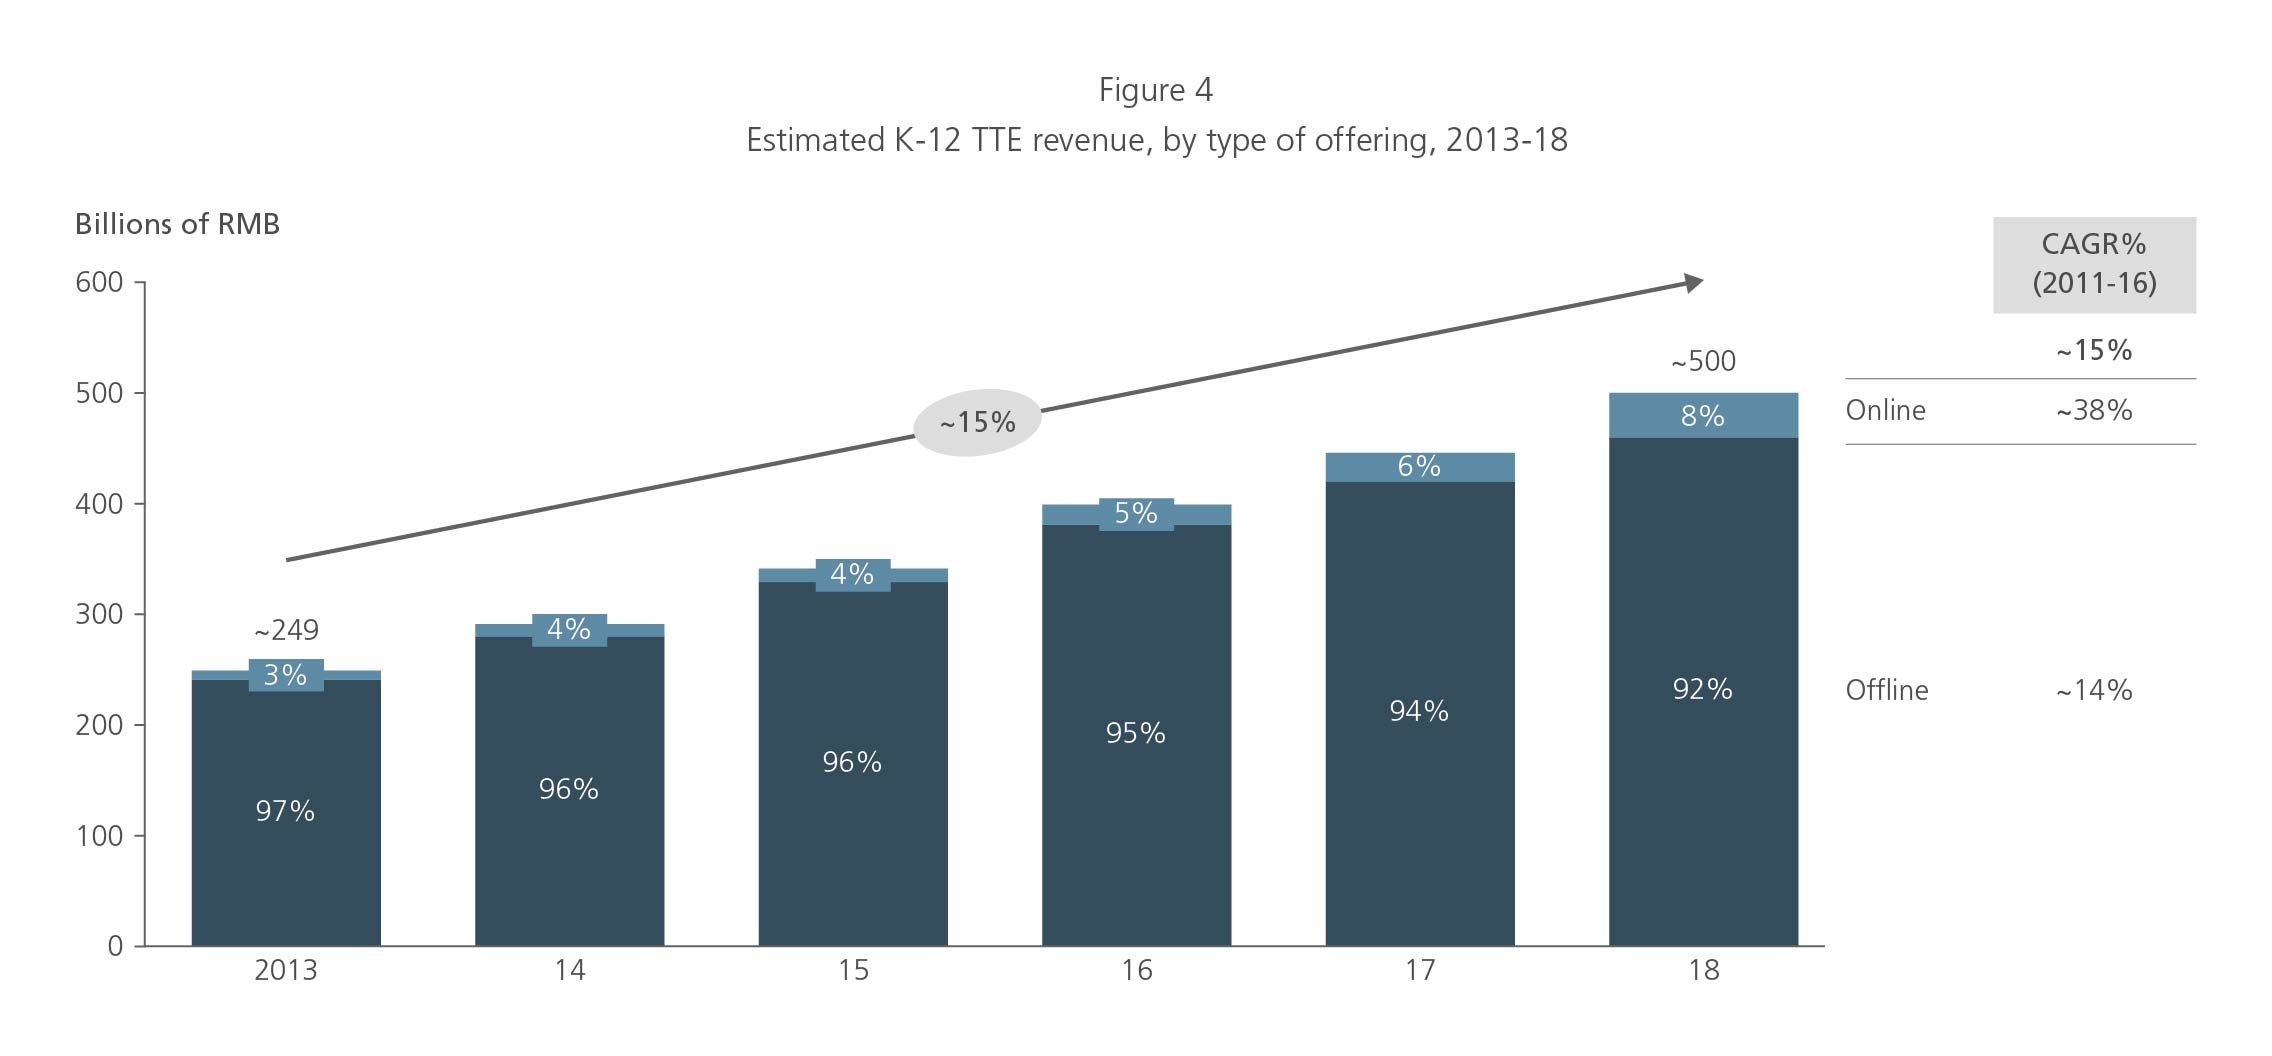 Estimated K-12 TTE revenue by offering type 2013-18